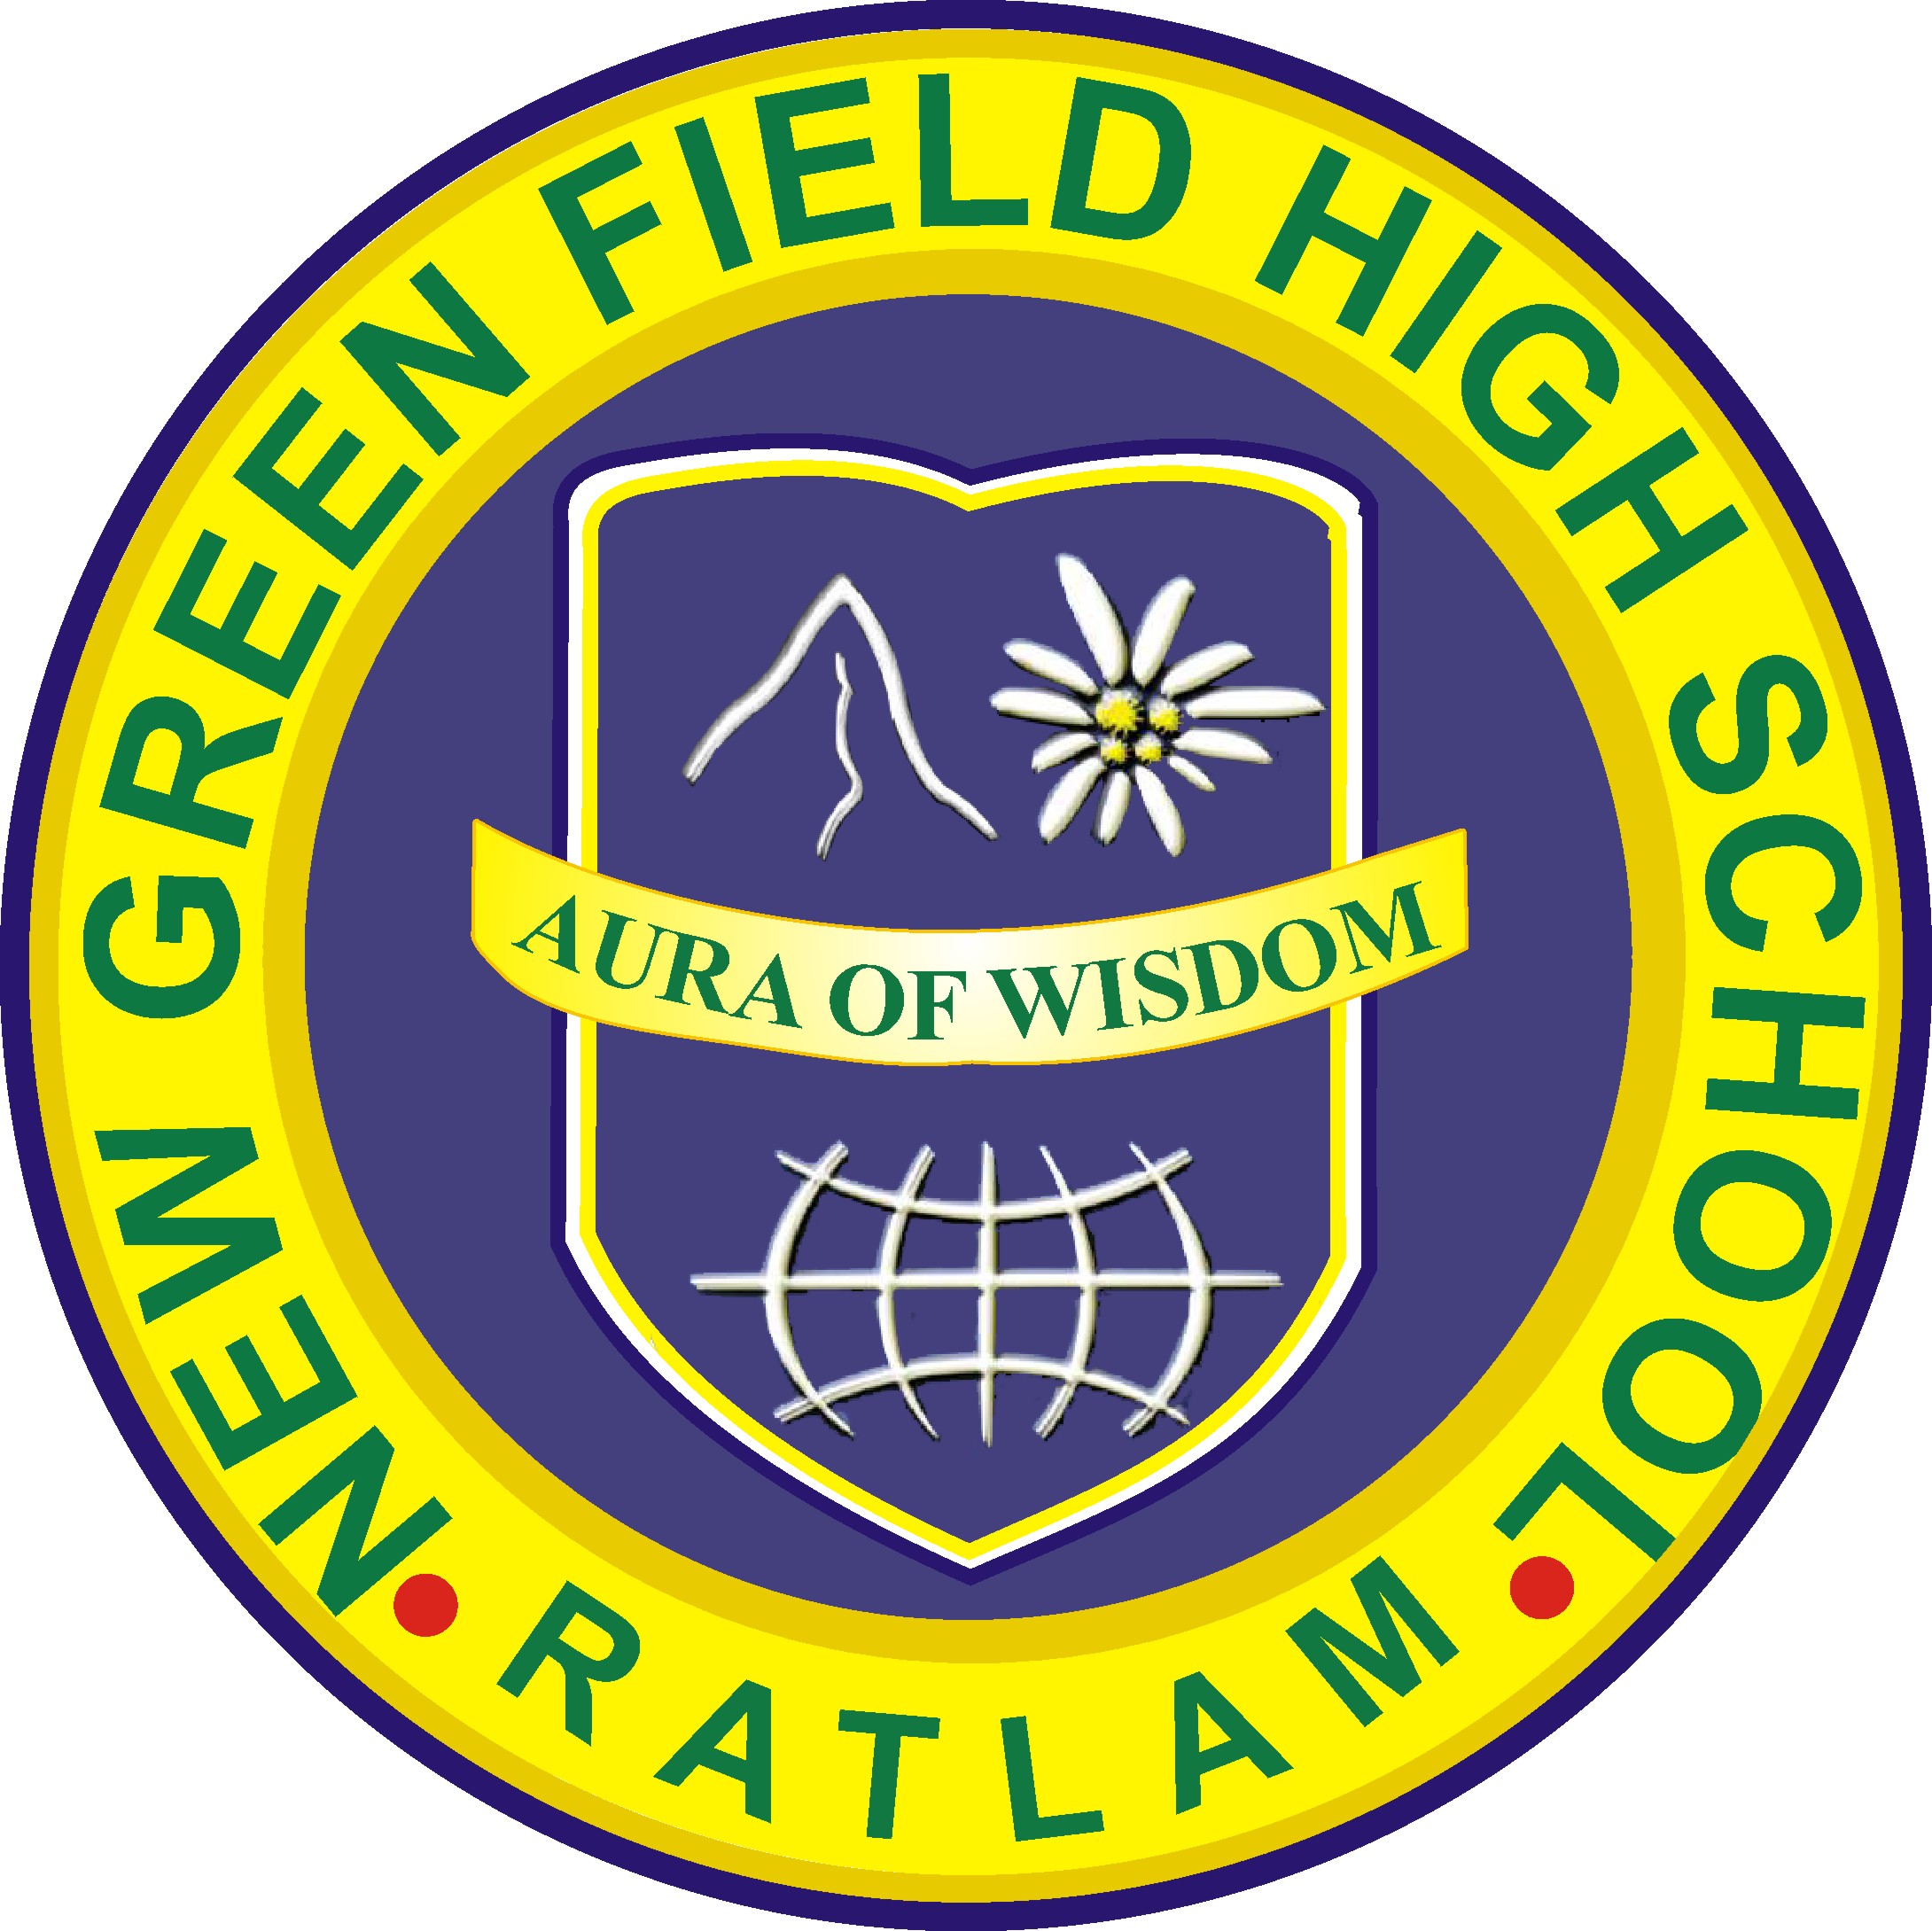 New Green Field High School|Schools|Education